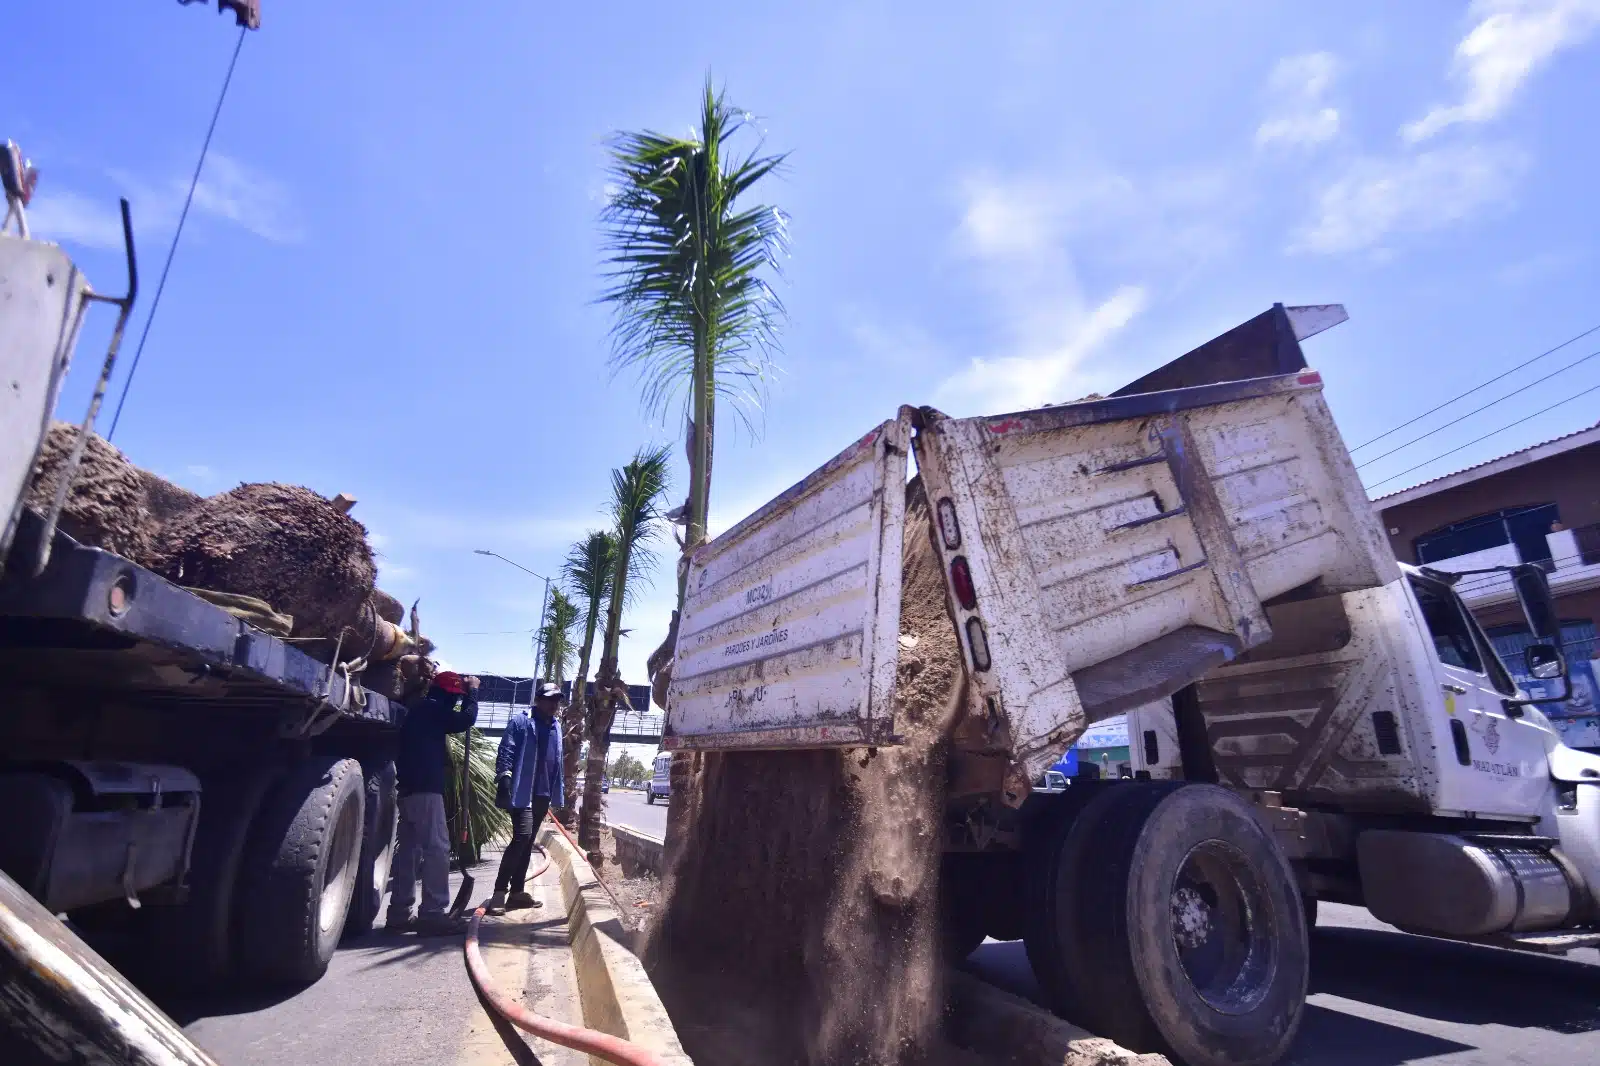 Dirección de Servicios Públicos de Mazatlán plantando palmas cocoteras en Mazatlán